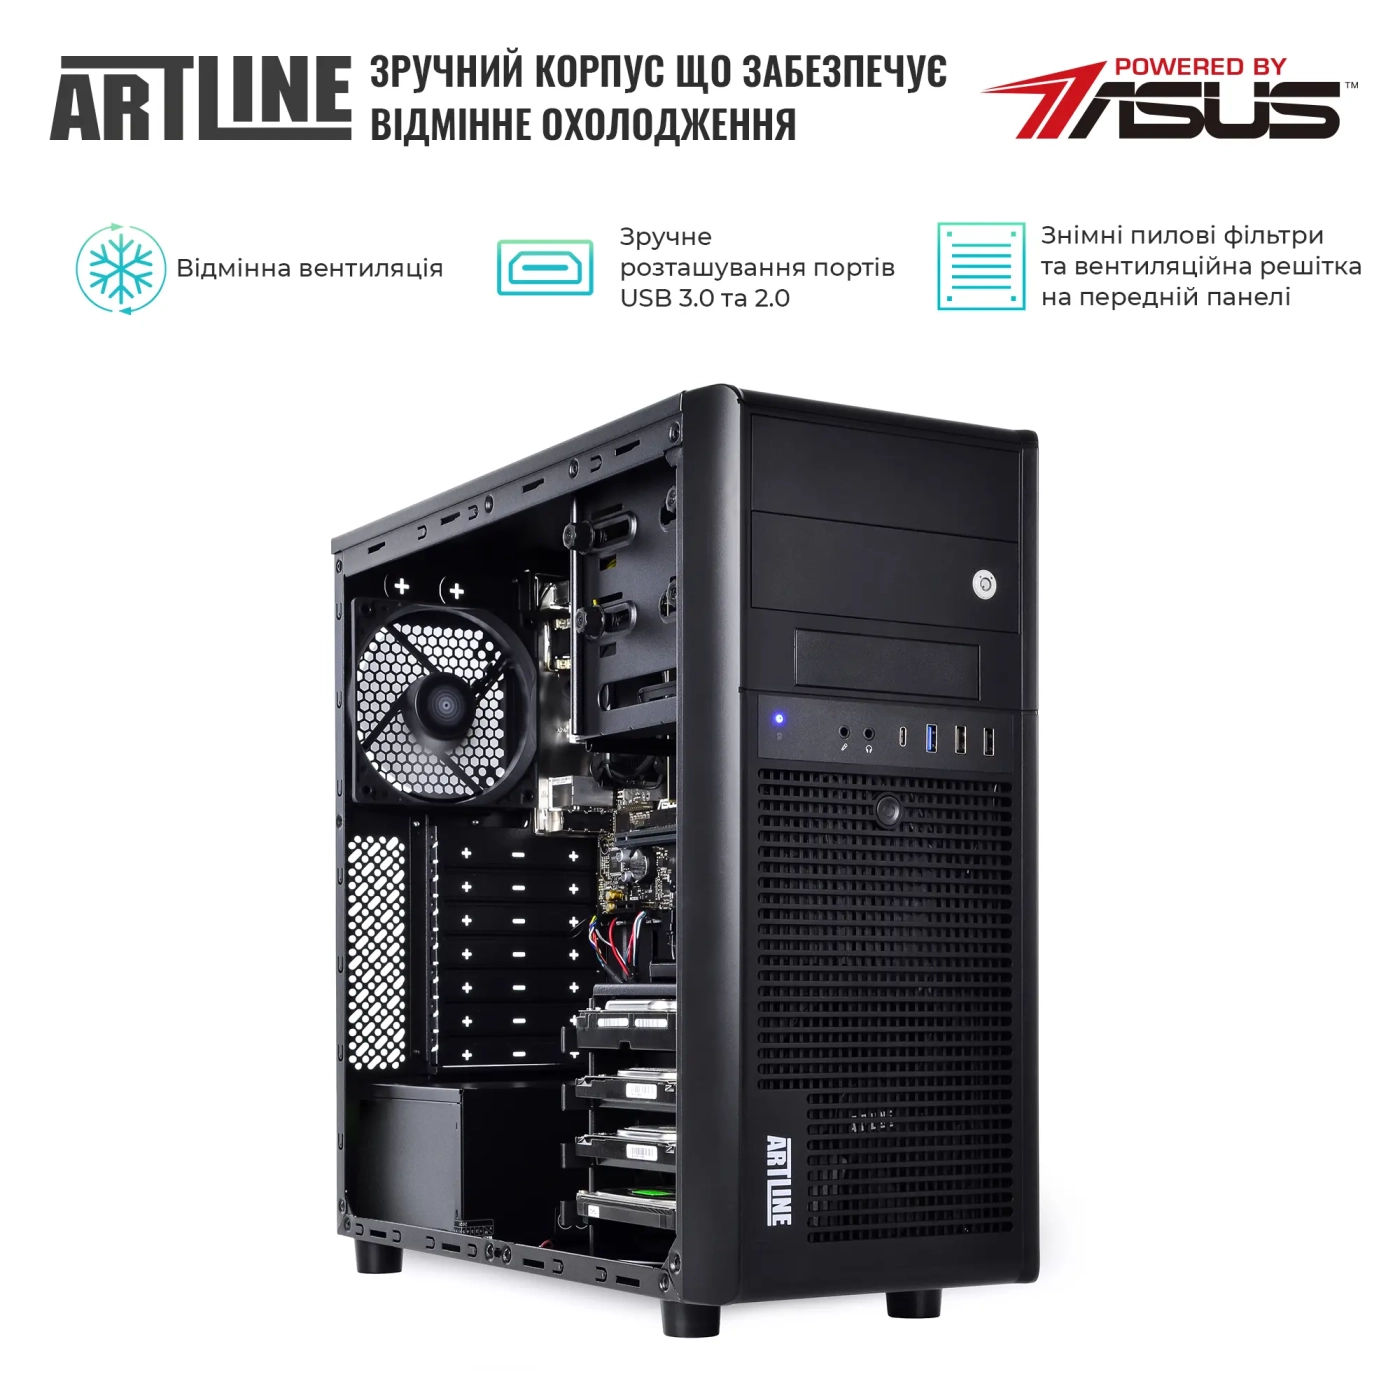 Купити Сервер ARTLINE Business T35v19 - фото 3